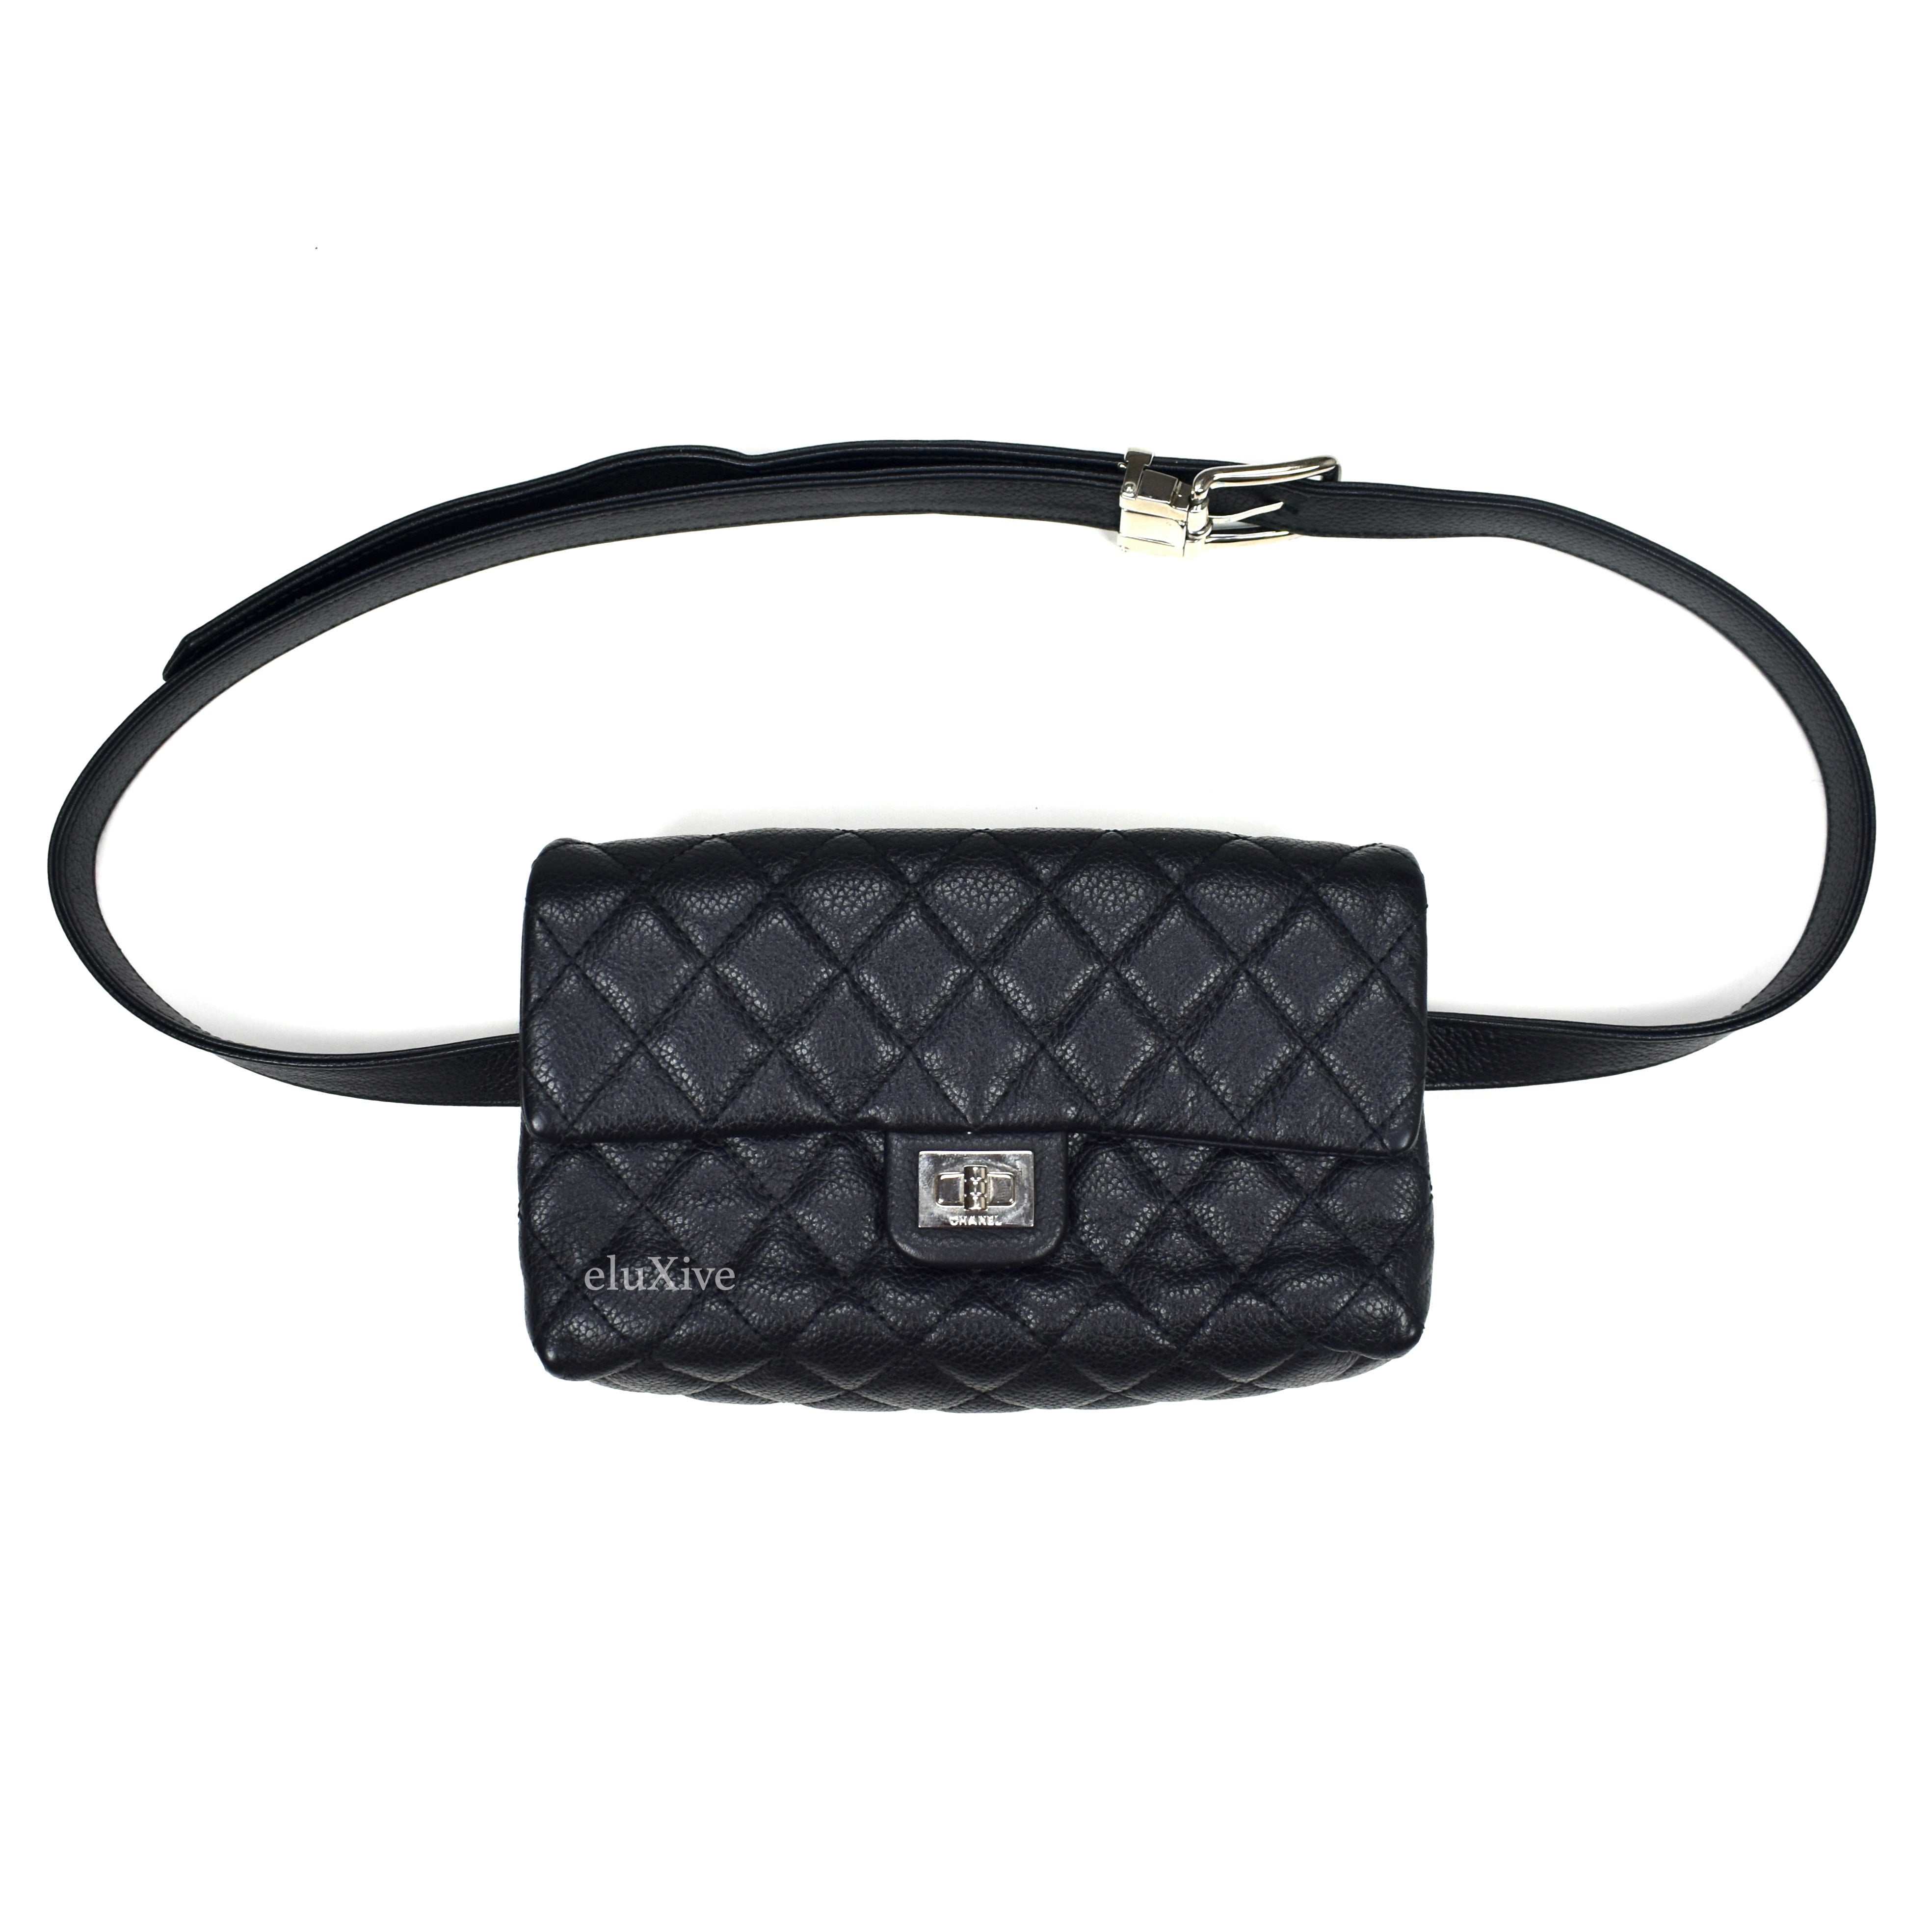 Chanel - Black Quilted Leather 2.55 Reissue Uniform Belt Bag – eluXive